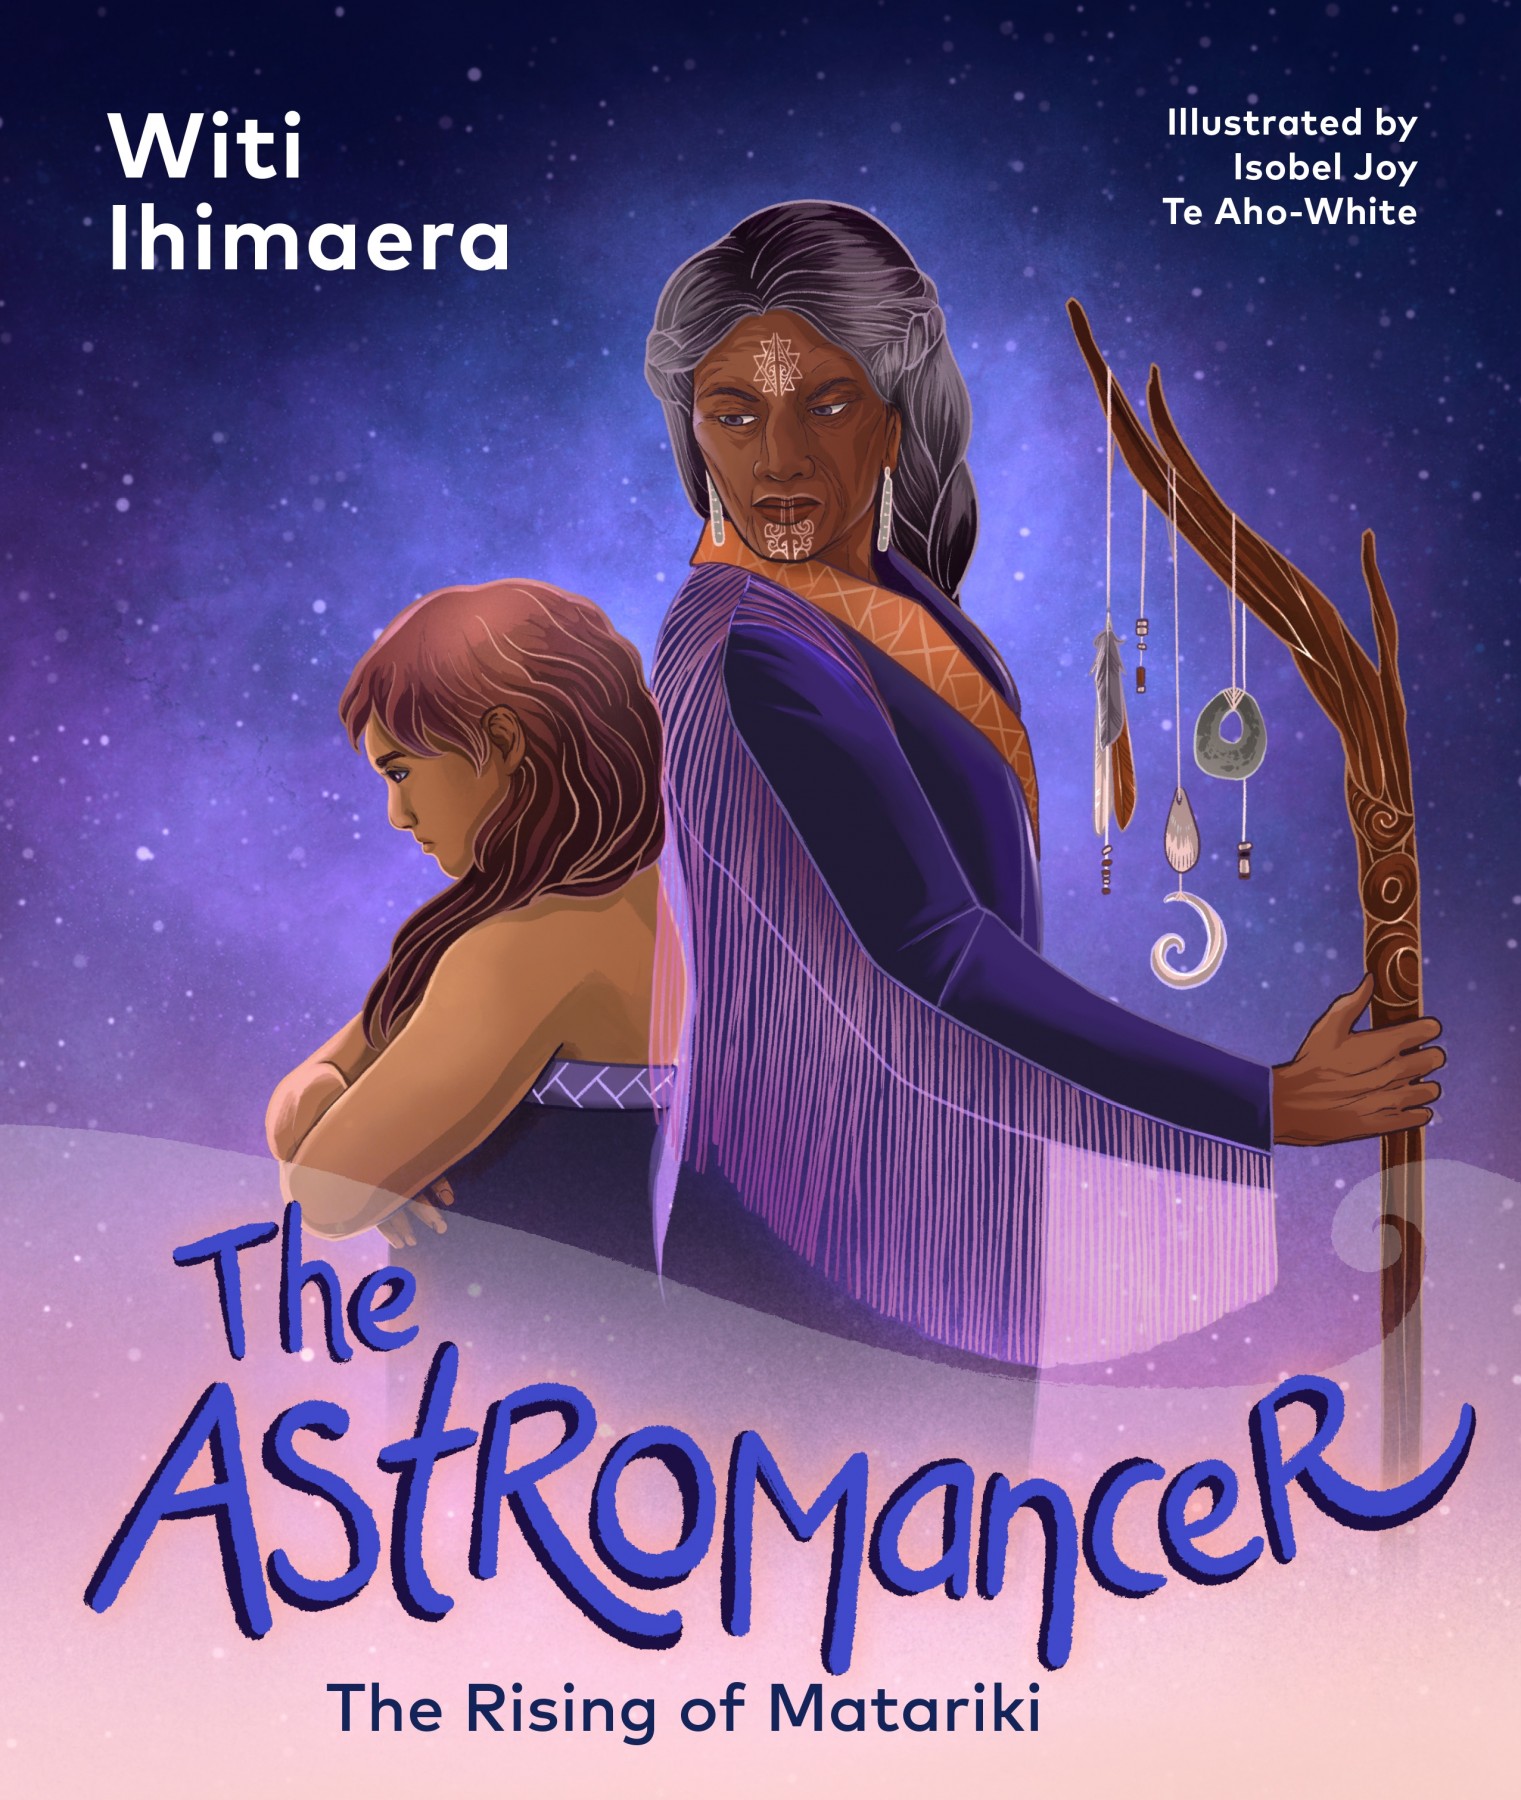 The Astromancer: The rising of Matariki